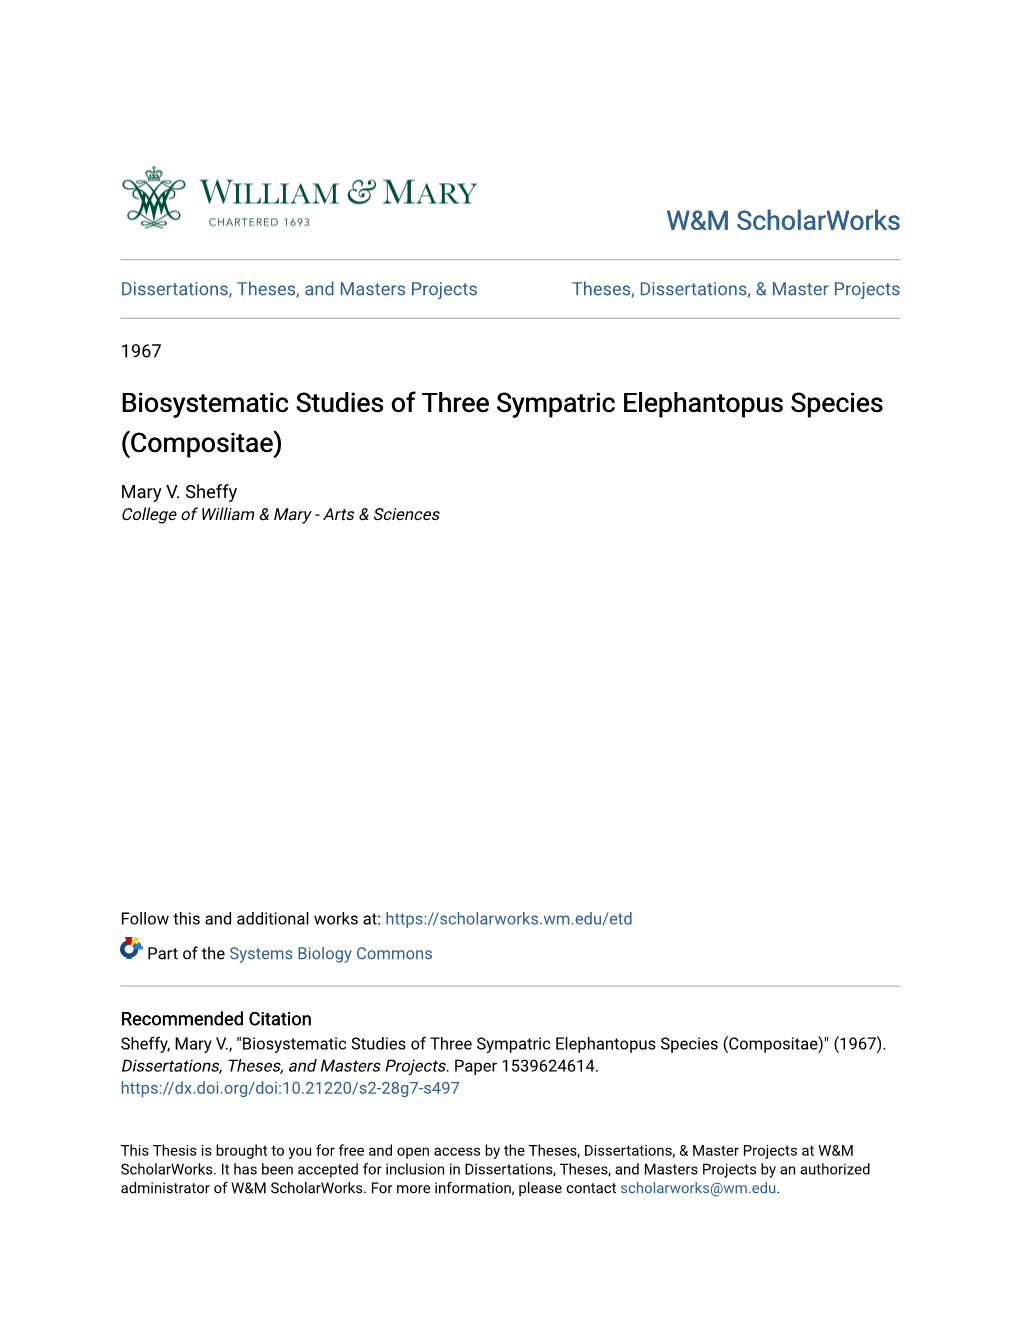 Biosystematic Studies of Three Sympatric Elephantopus Species (Compositae)